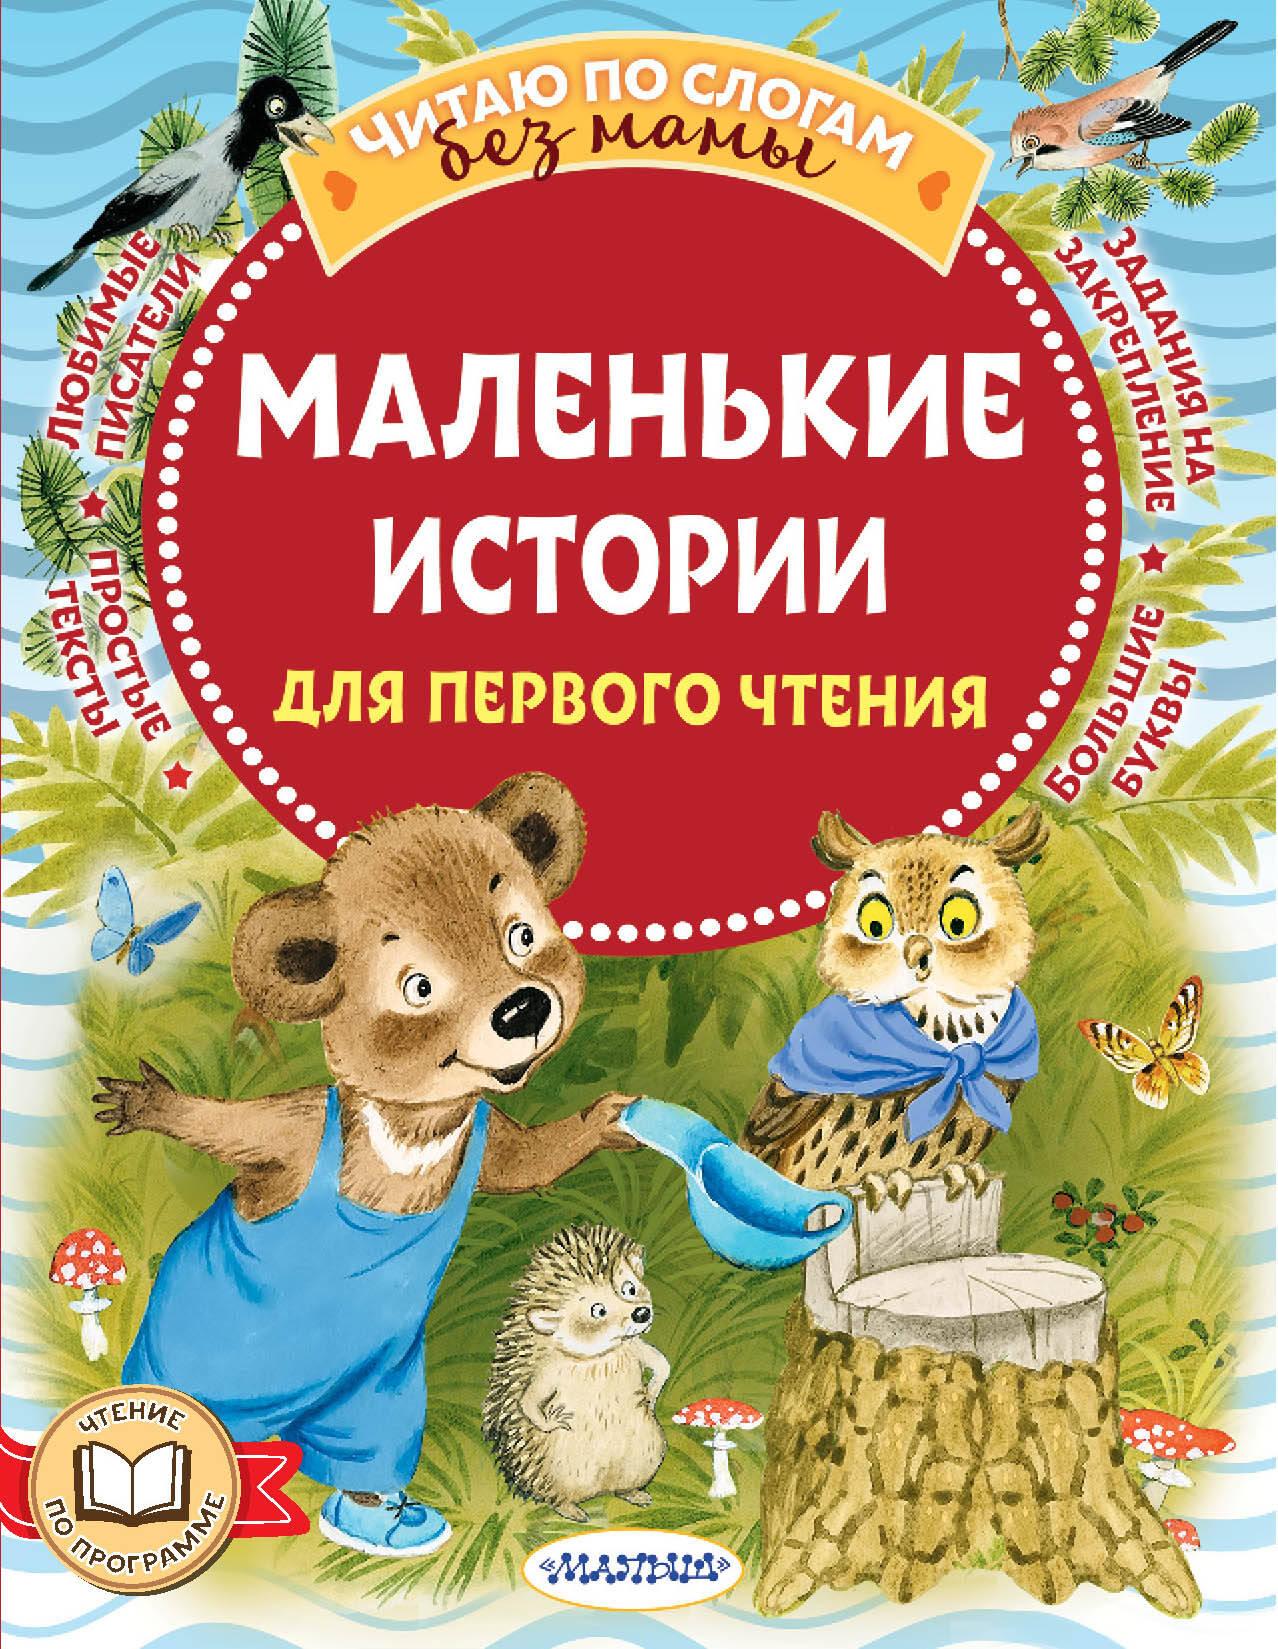 https://cdn.book24.ru/v2/ASE000000000875459/COVER/cover13d.jpg